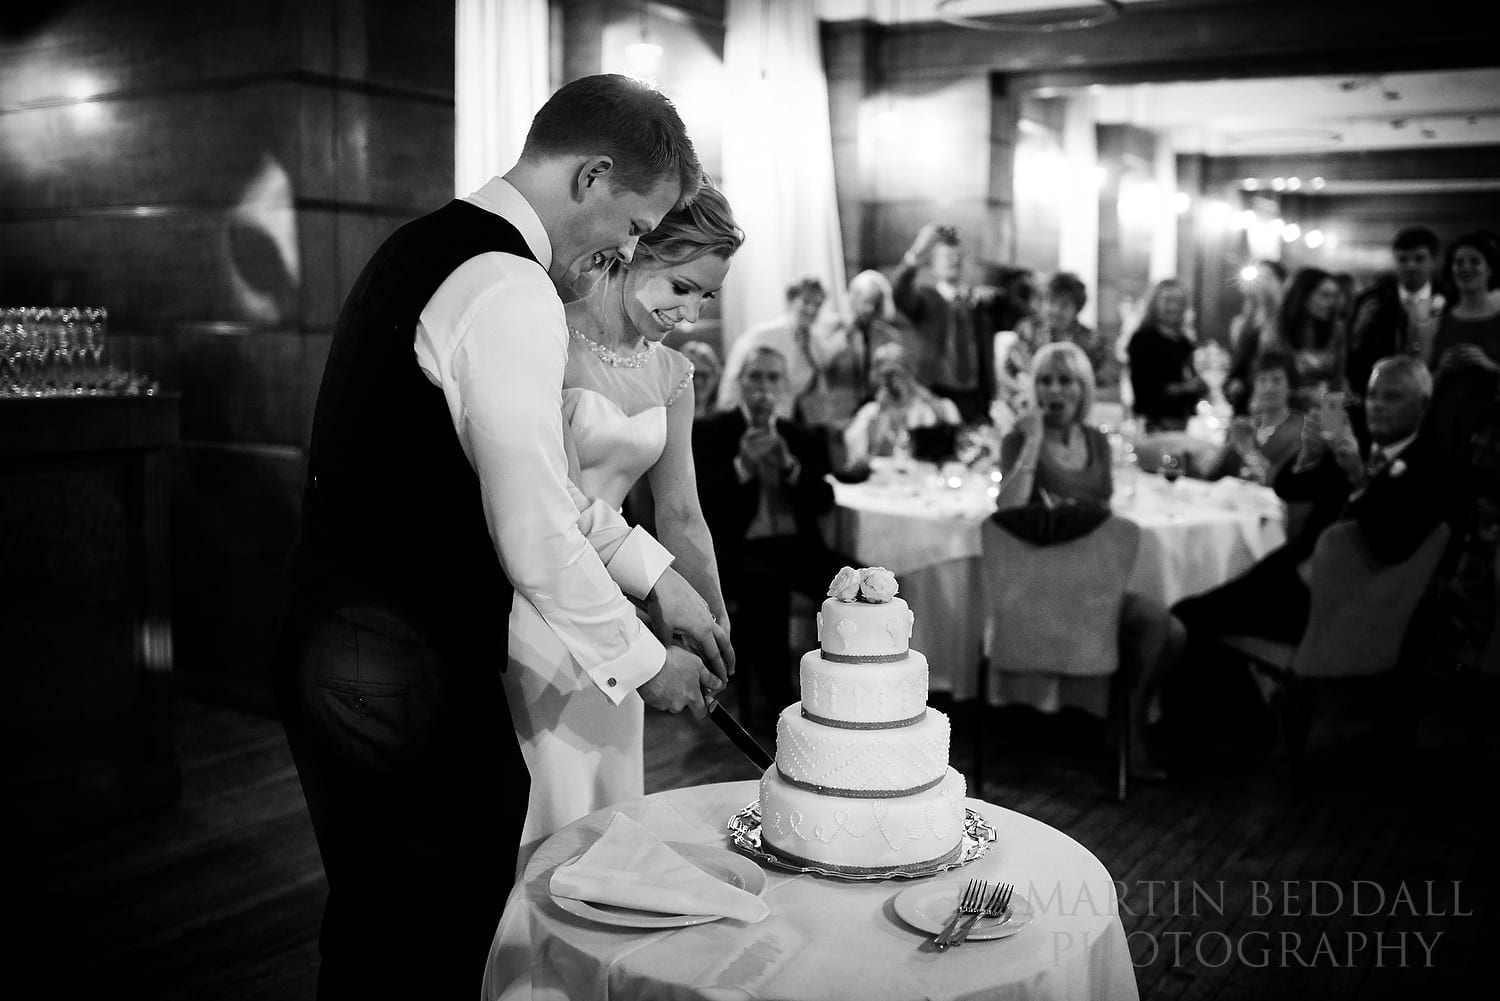 Cutting the wedding cake on the dance floor